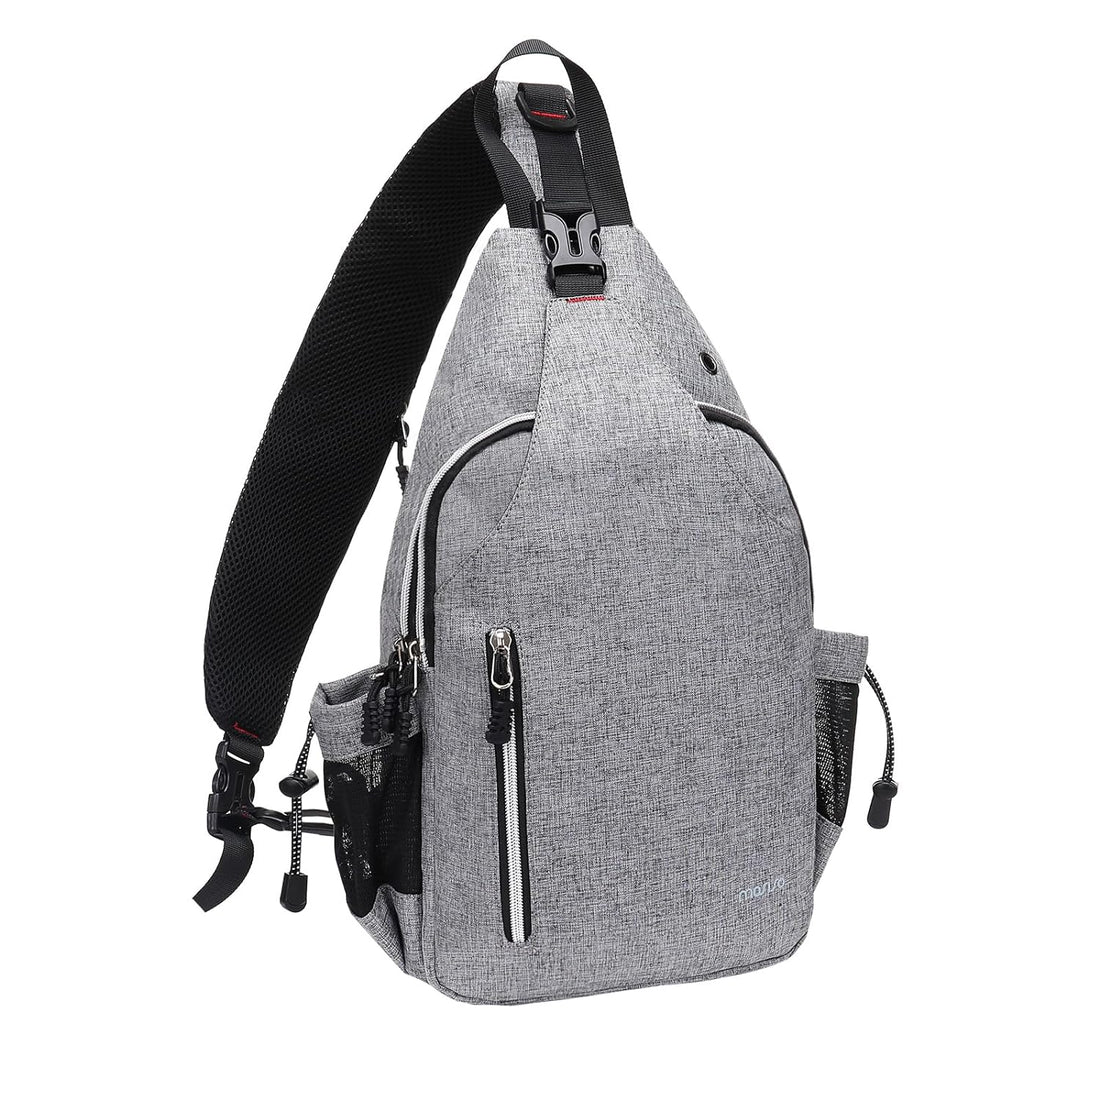 MOSISO Sling Backpack Double Layer Hiking Daypack Men/Women Chest Shoulder Bag